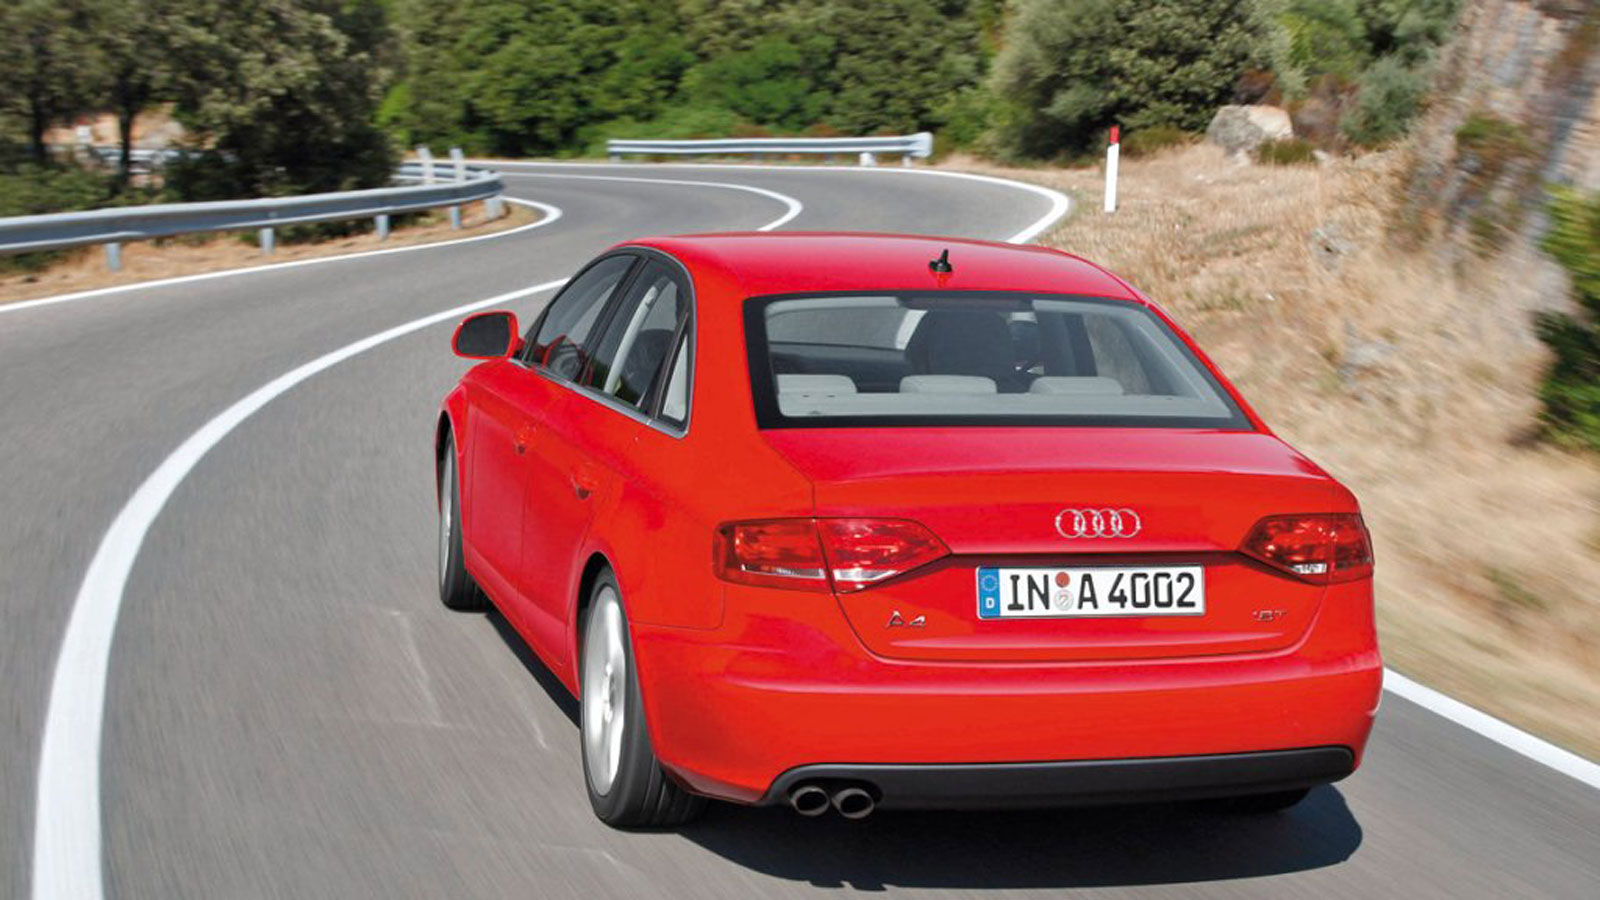 Audi A4 diesel 2007-2015 με 300.000 χλμ: Τι ζημιές βγάζει;